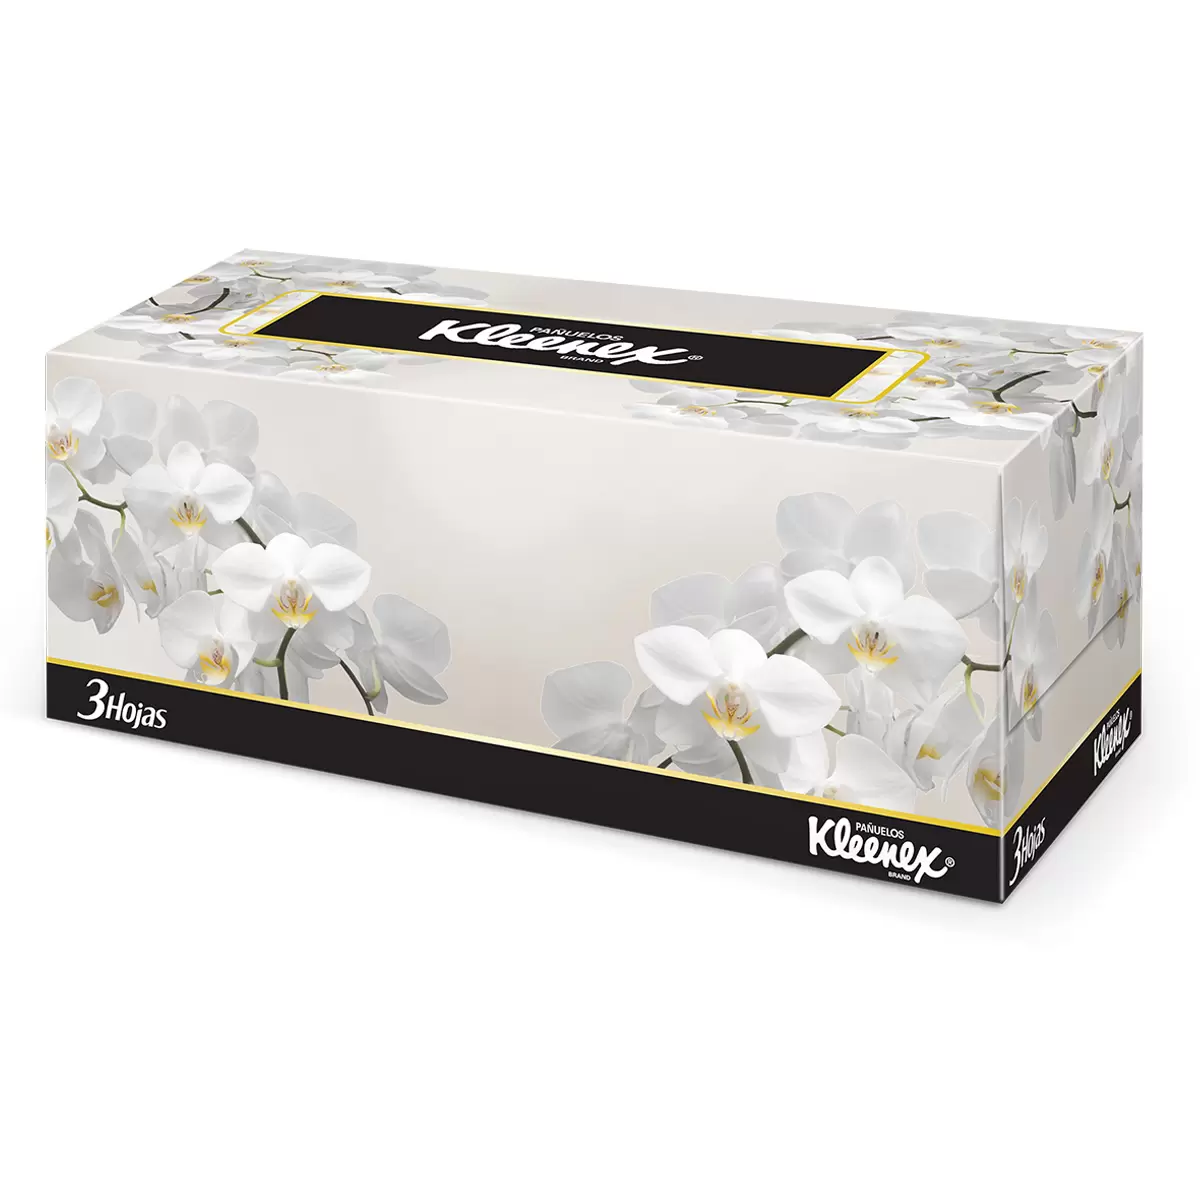 Pañuelos Kleenex Aromas 1 paquete con 6 pzas